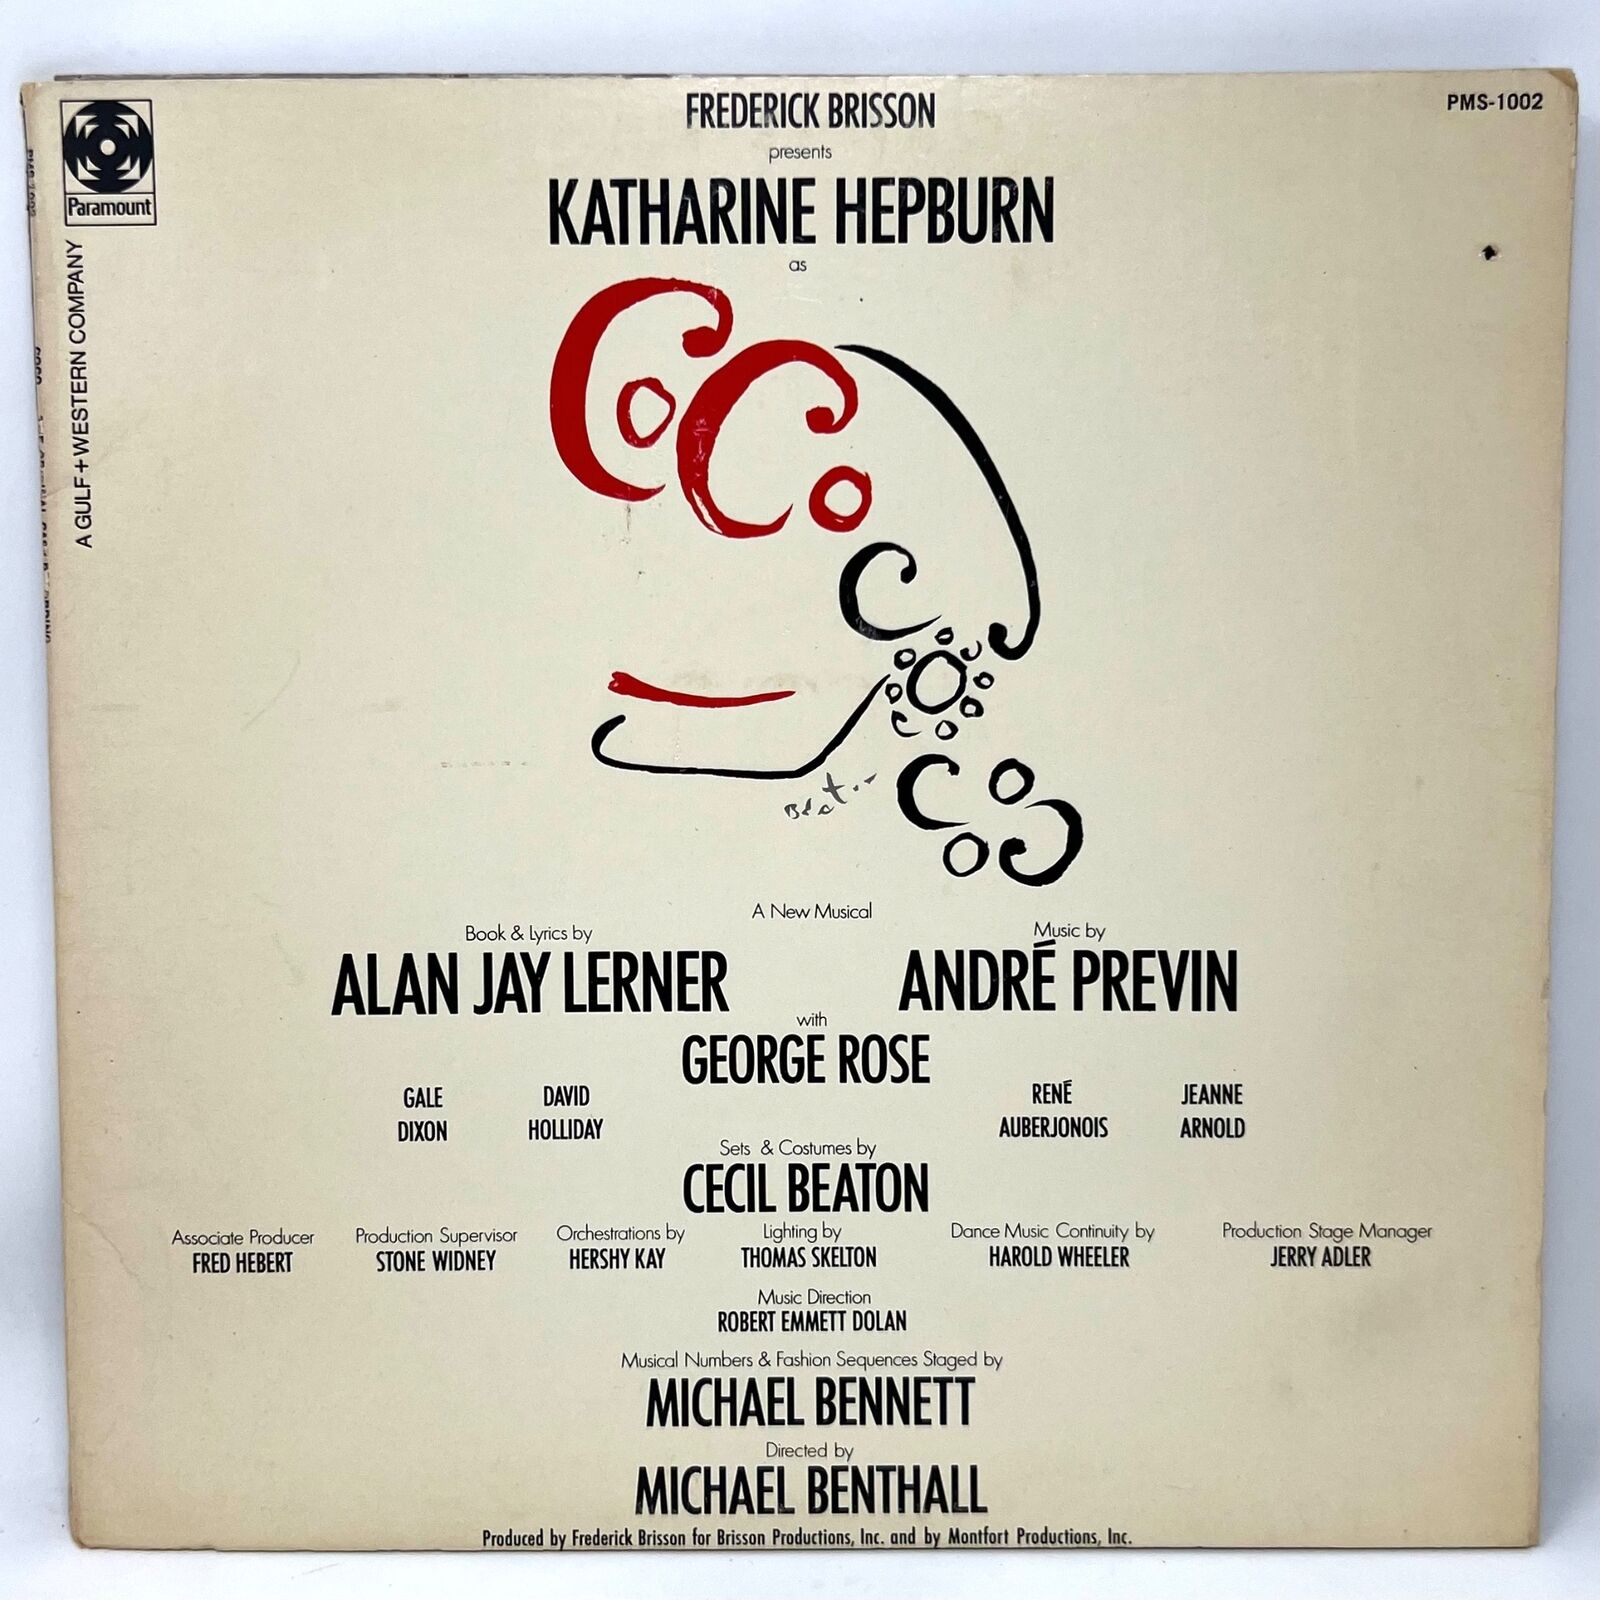 Katharine Hepburn Coco The Original Broadway Cast Recording LP Vinyl Record